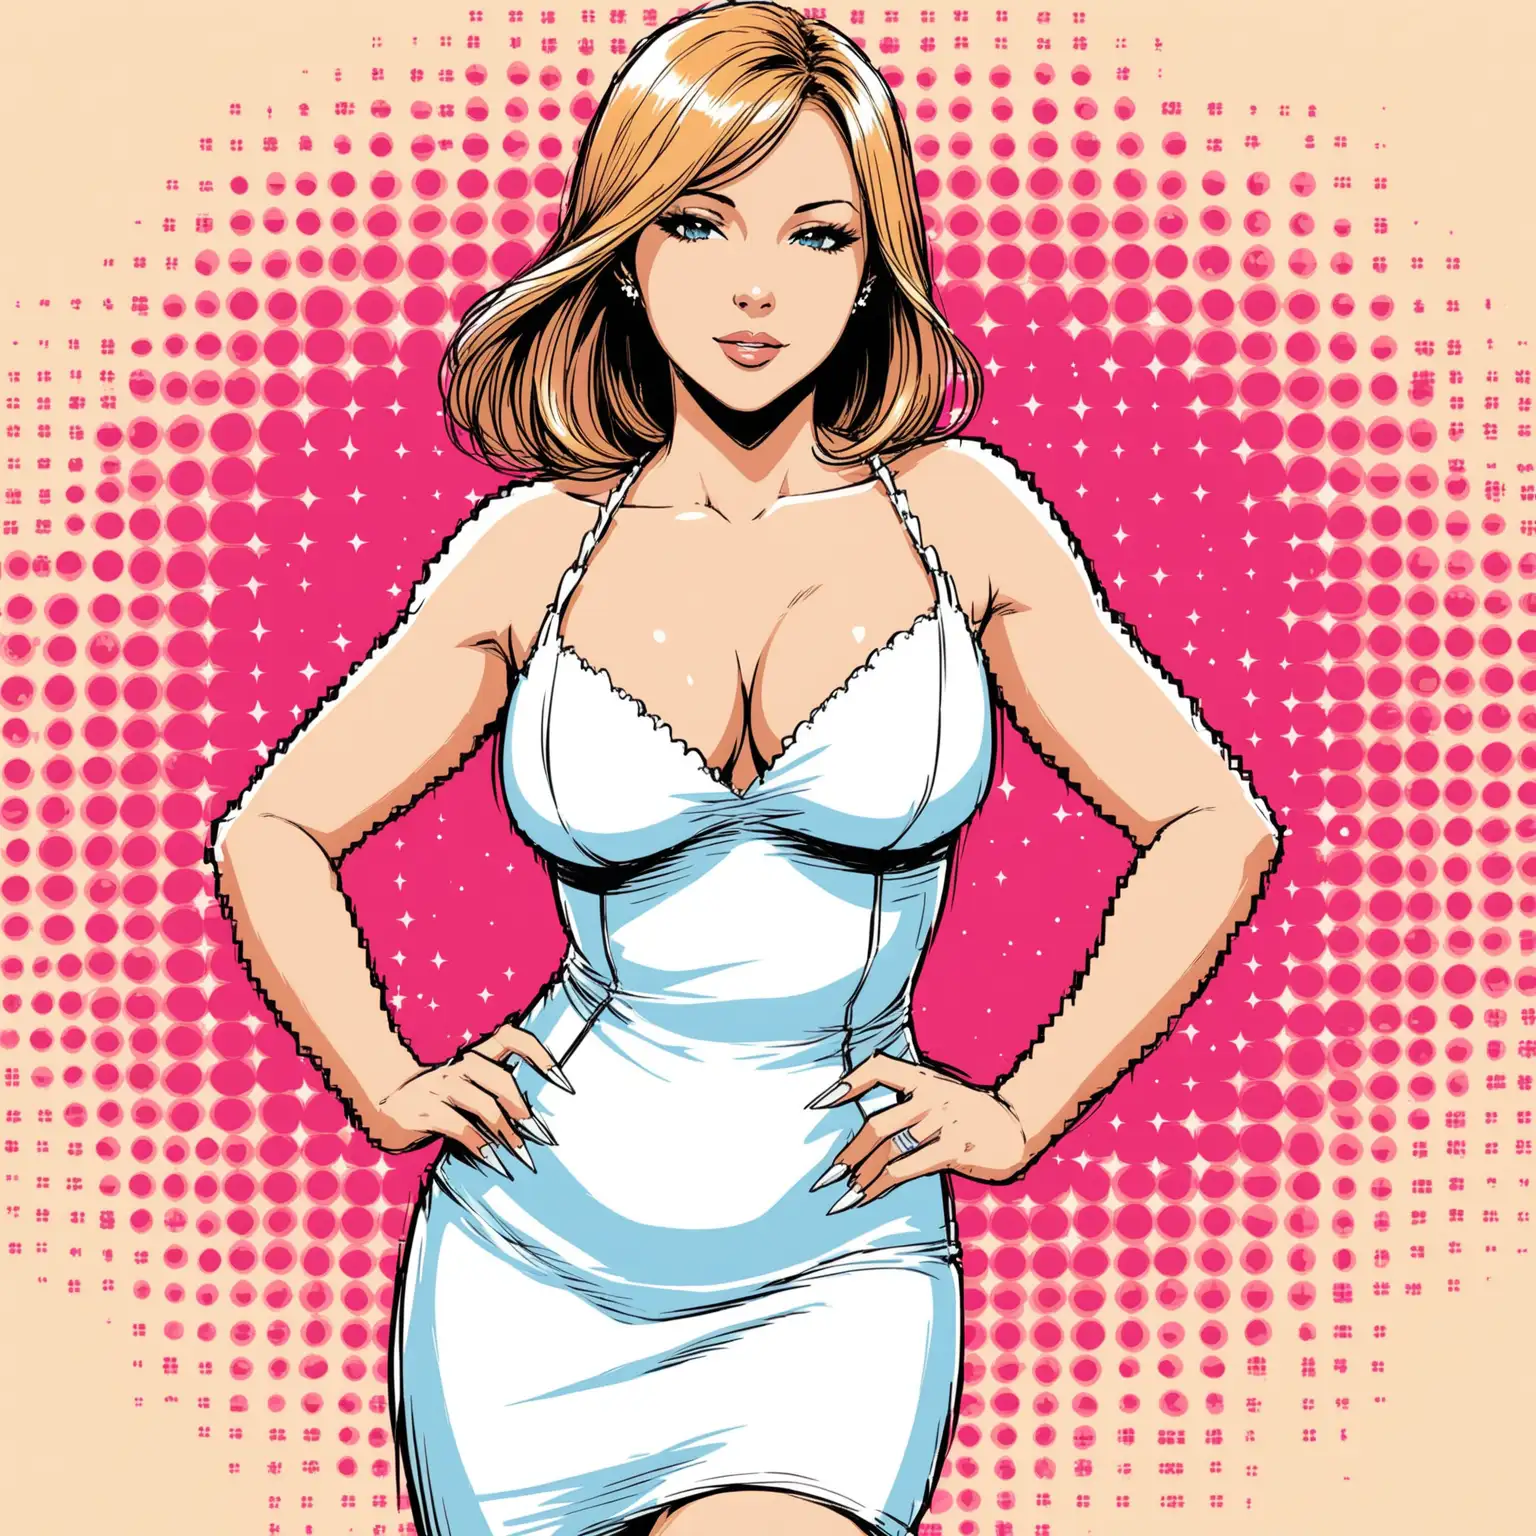 Elegant JenniferInspired Woman in Stylish Comic Book Art